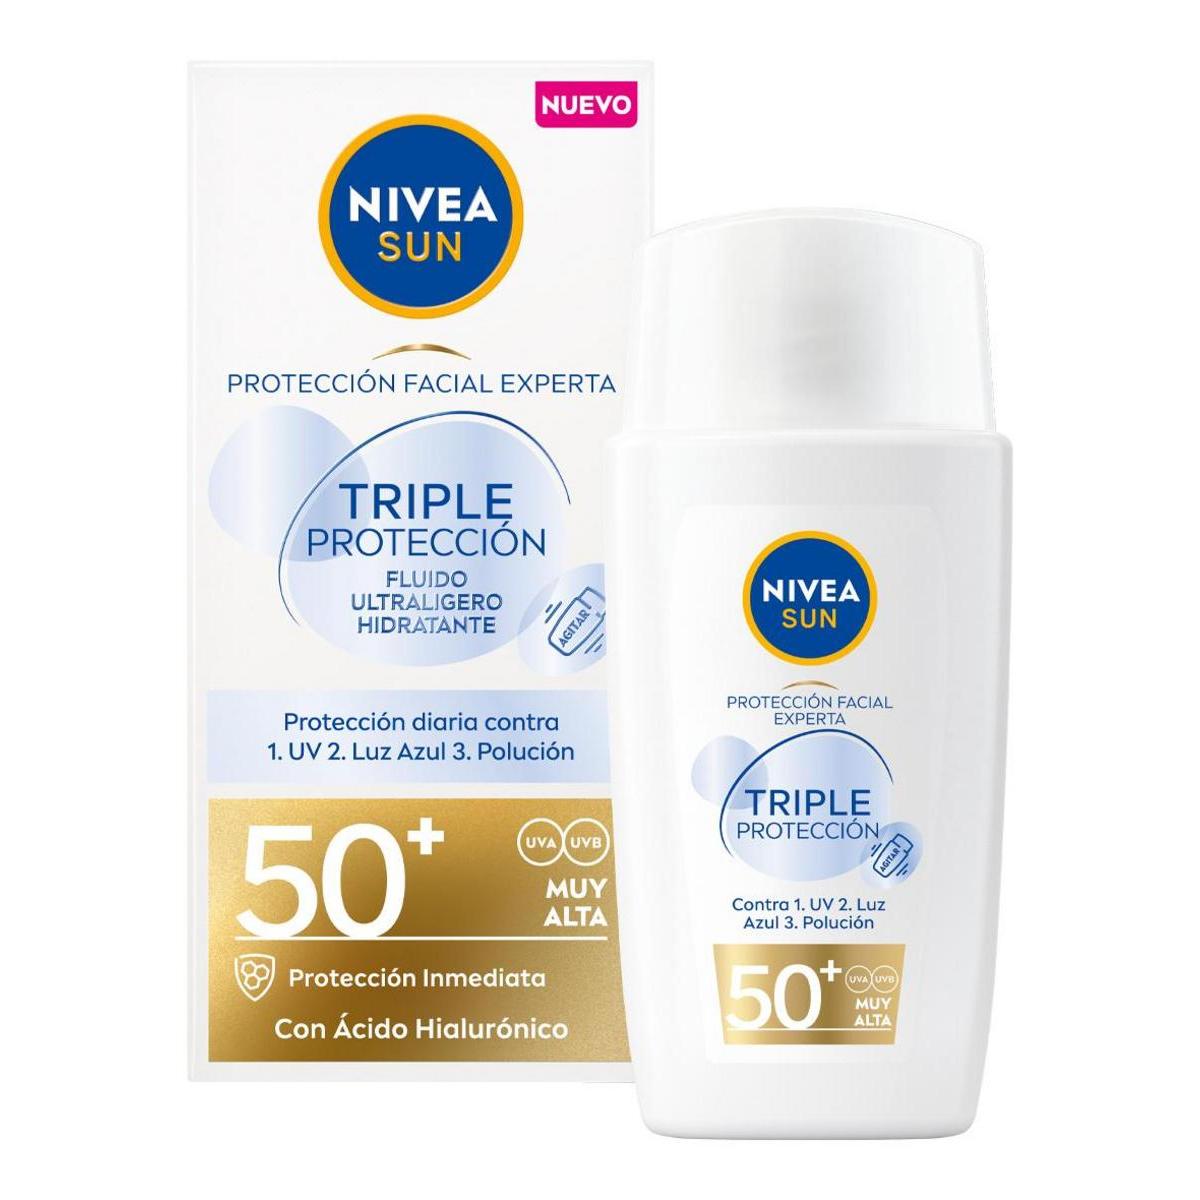 Nivea - NIVEA SUN Fluido Facial Ultraligero Triple Protección FP50+